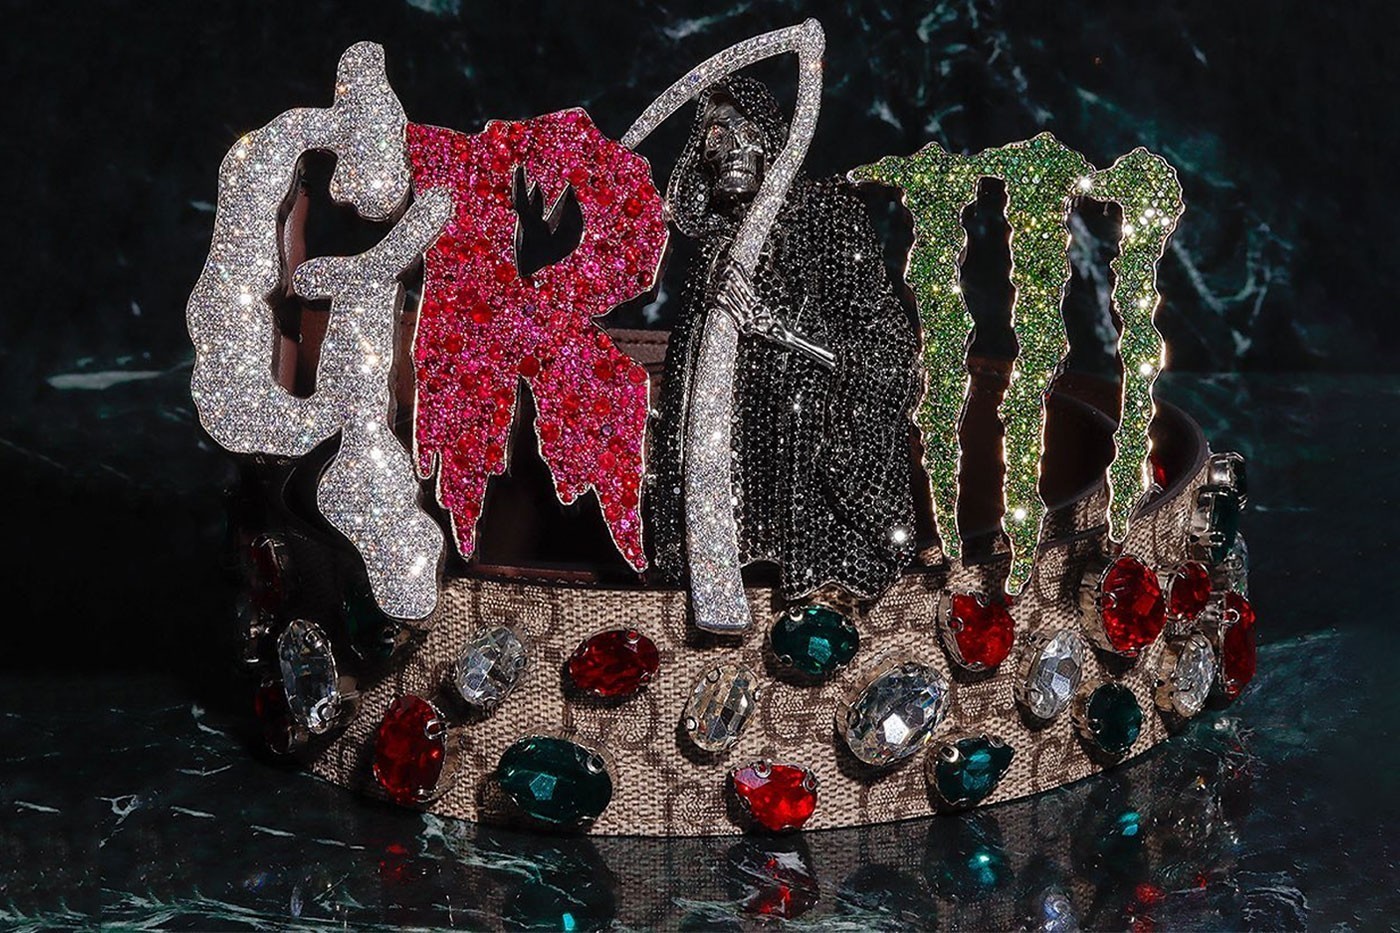 Alex Moss New York 为 A$AP Rocky 打造要价 32 万美元的珠宝皮带扣